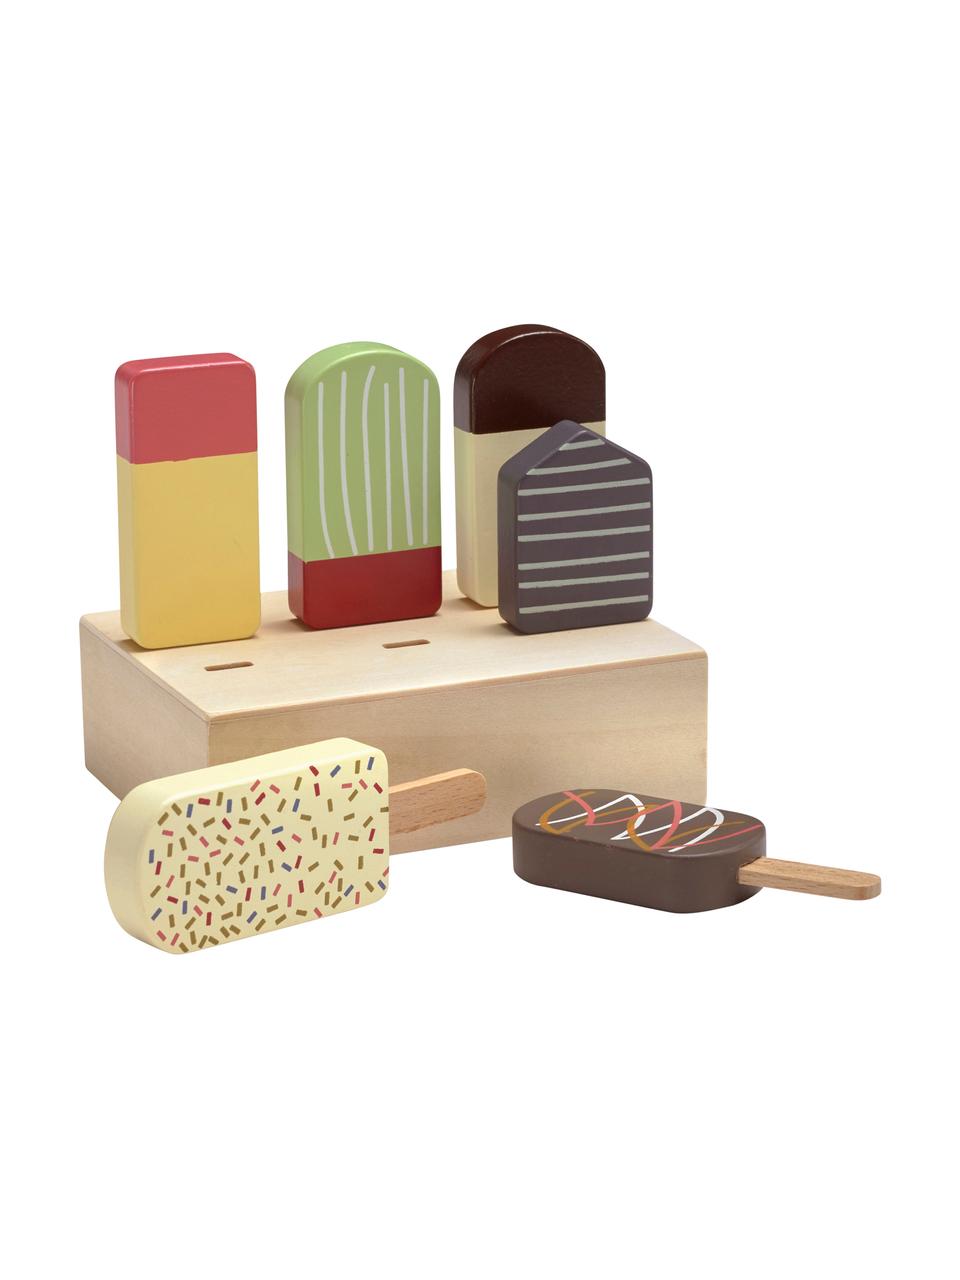 Spielzeug-Set Ice Cream, Holz, Mehrfarbig, B 9 x H 12 cm